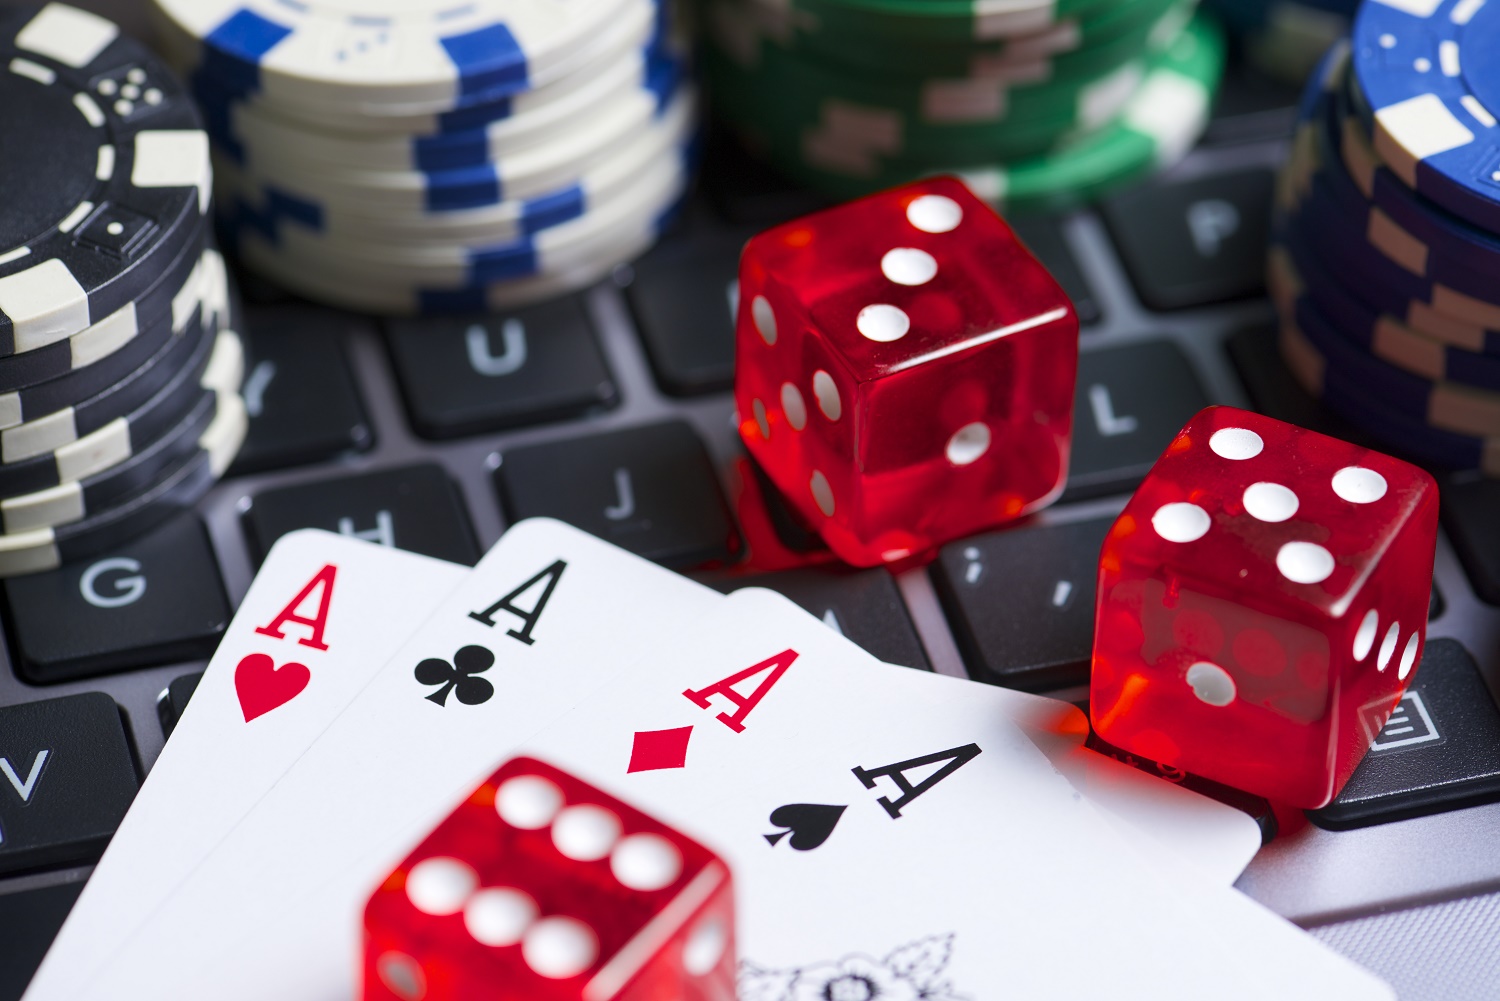 Most popular compensation programs of online casinos